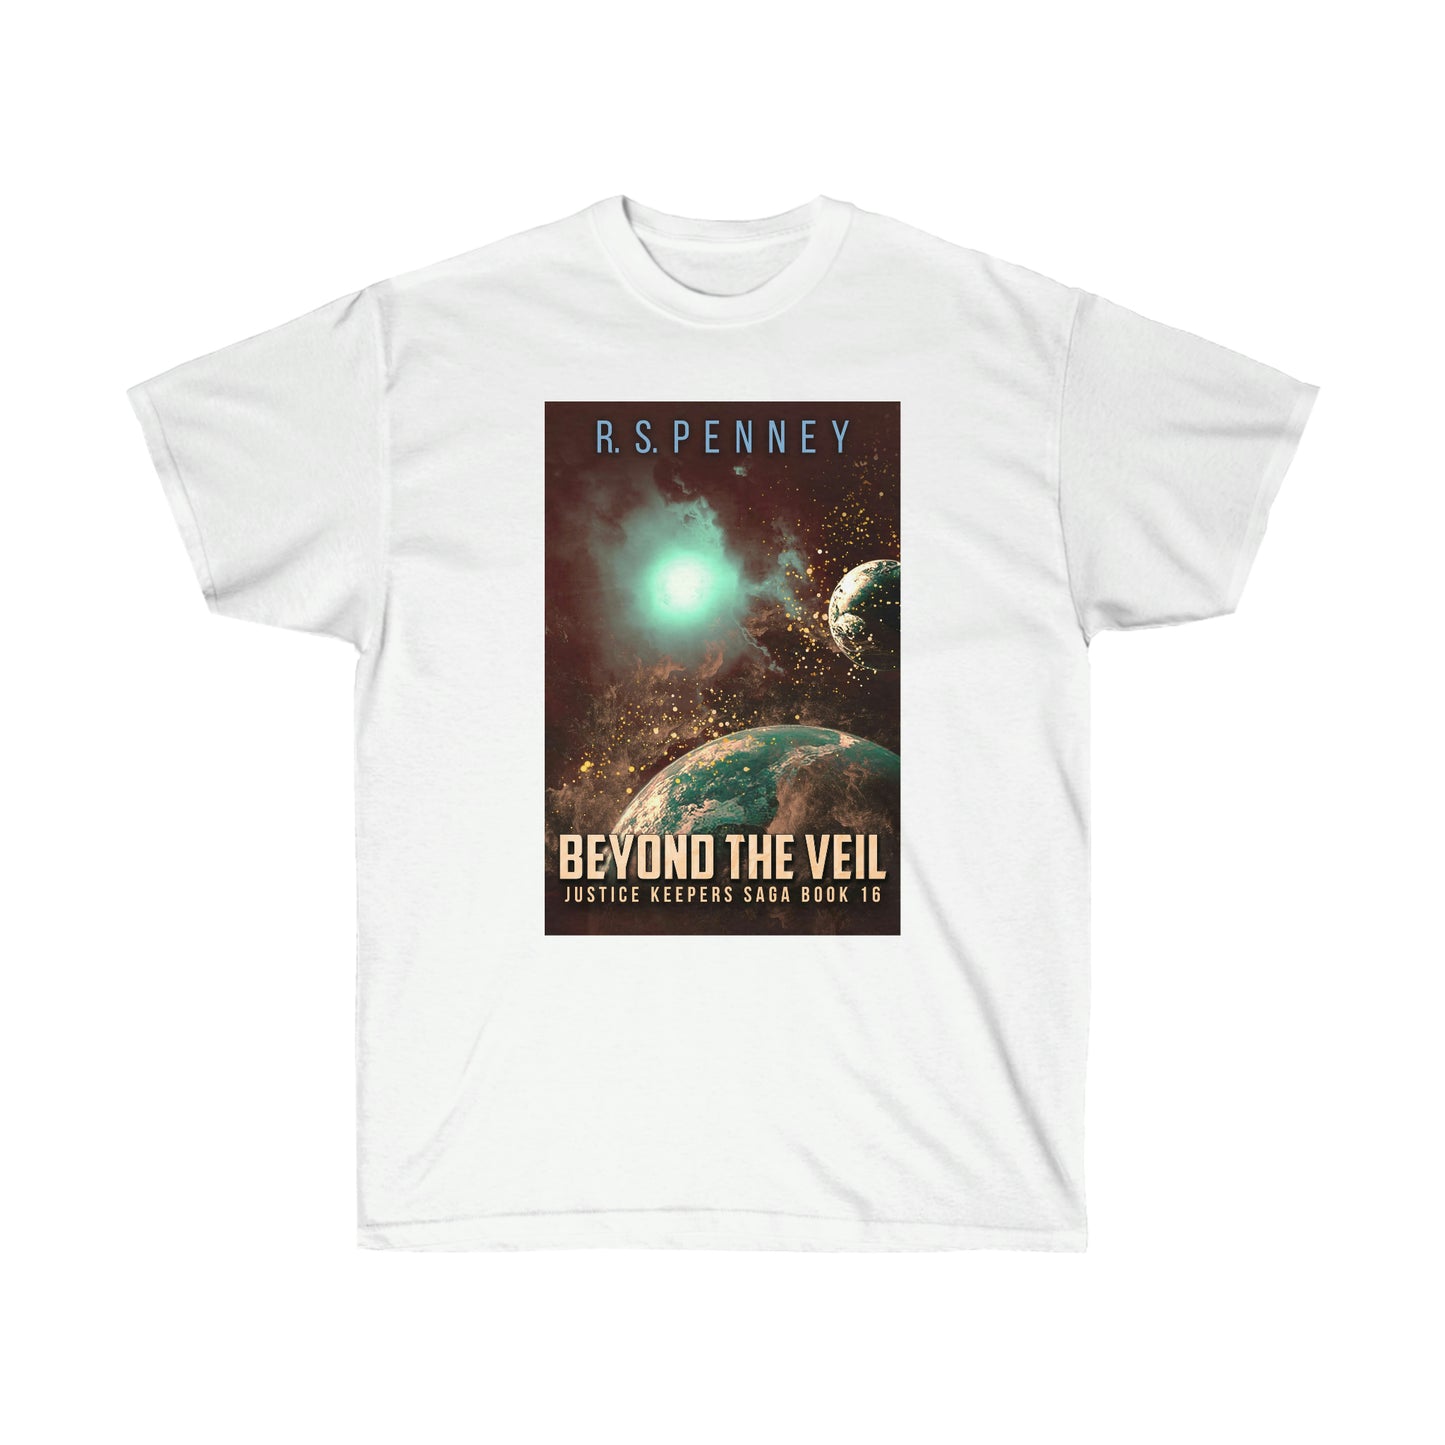 Beyond The Veil - Unisex T-Shirt